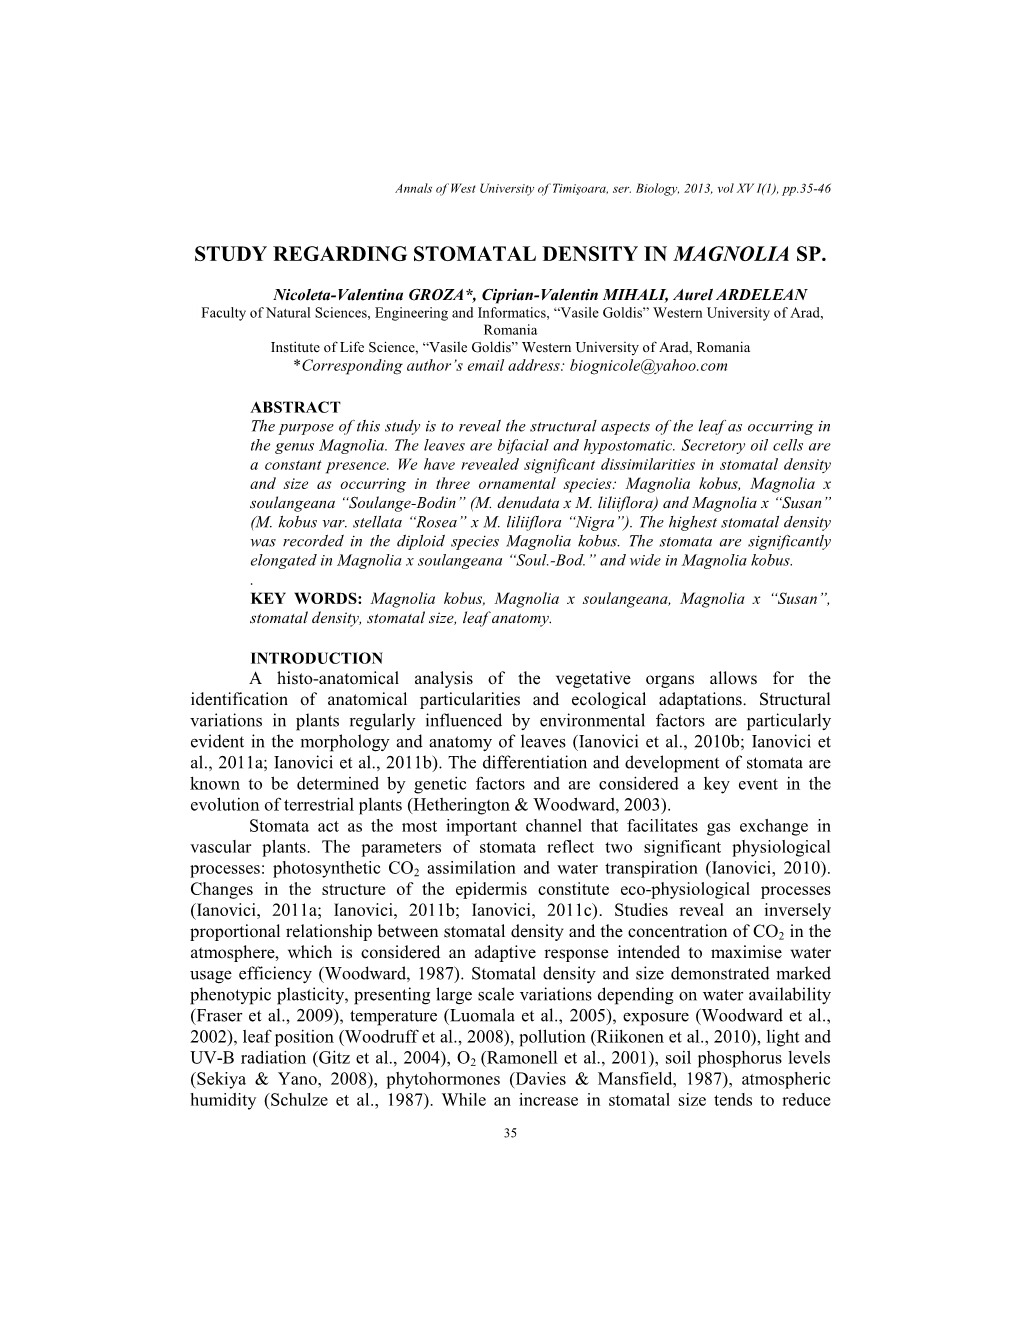 Study Regarding Stomatal Density in Magnolia Sp